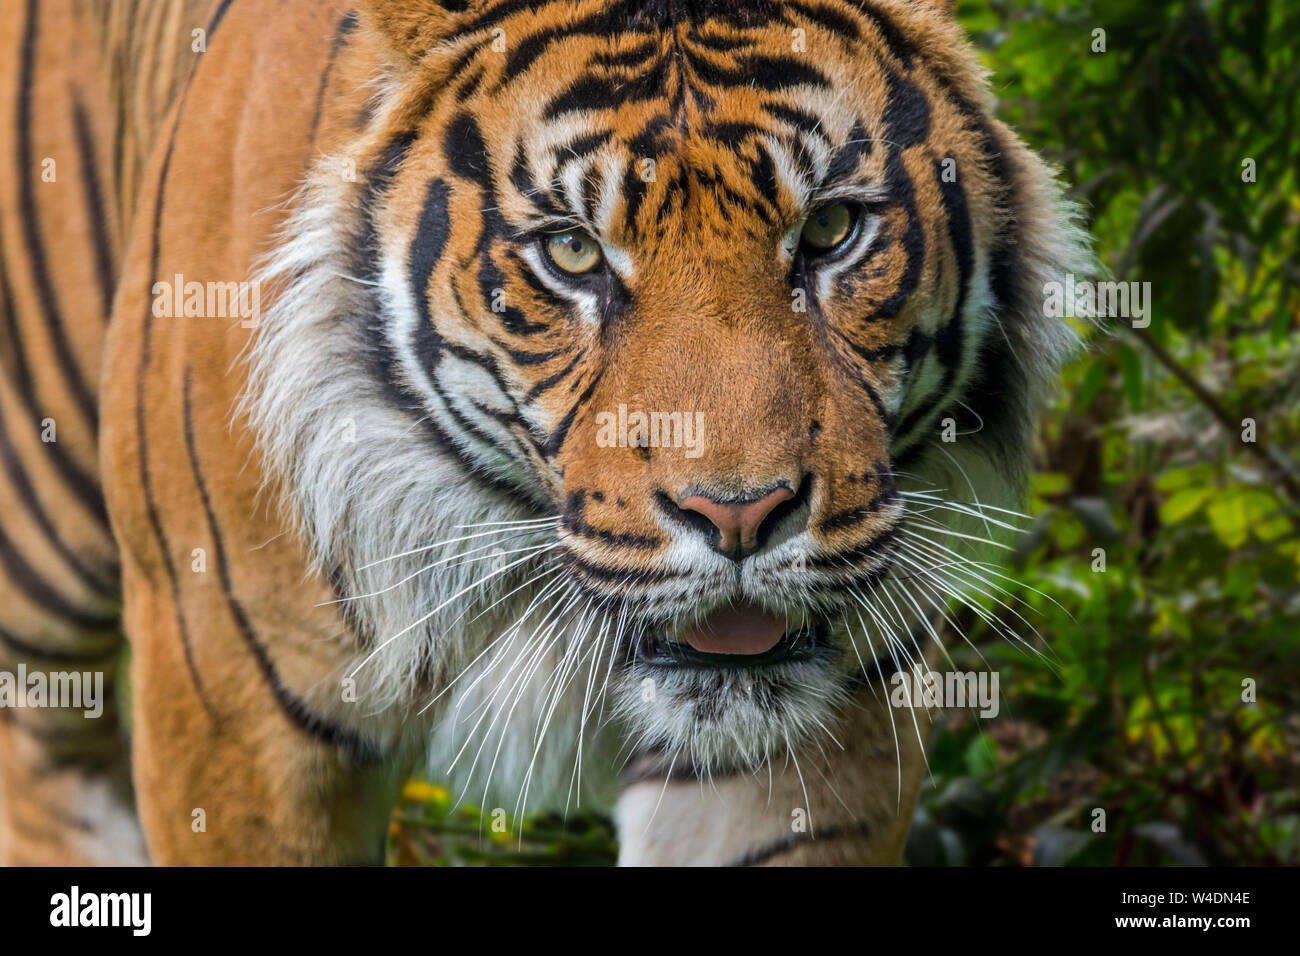 Sumatran tiger (Panthera tigris sondaica) in tropical forest, native to the Indonesian island of Sumatra, Indonesia Stock Photo